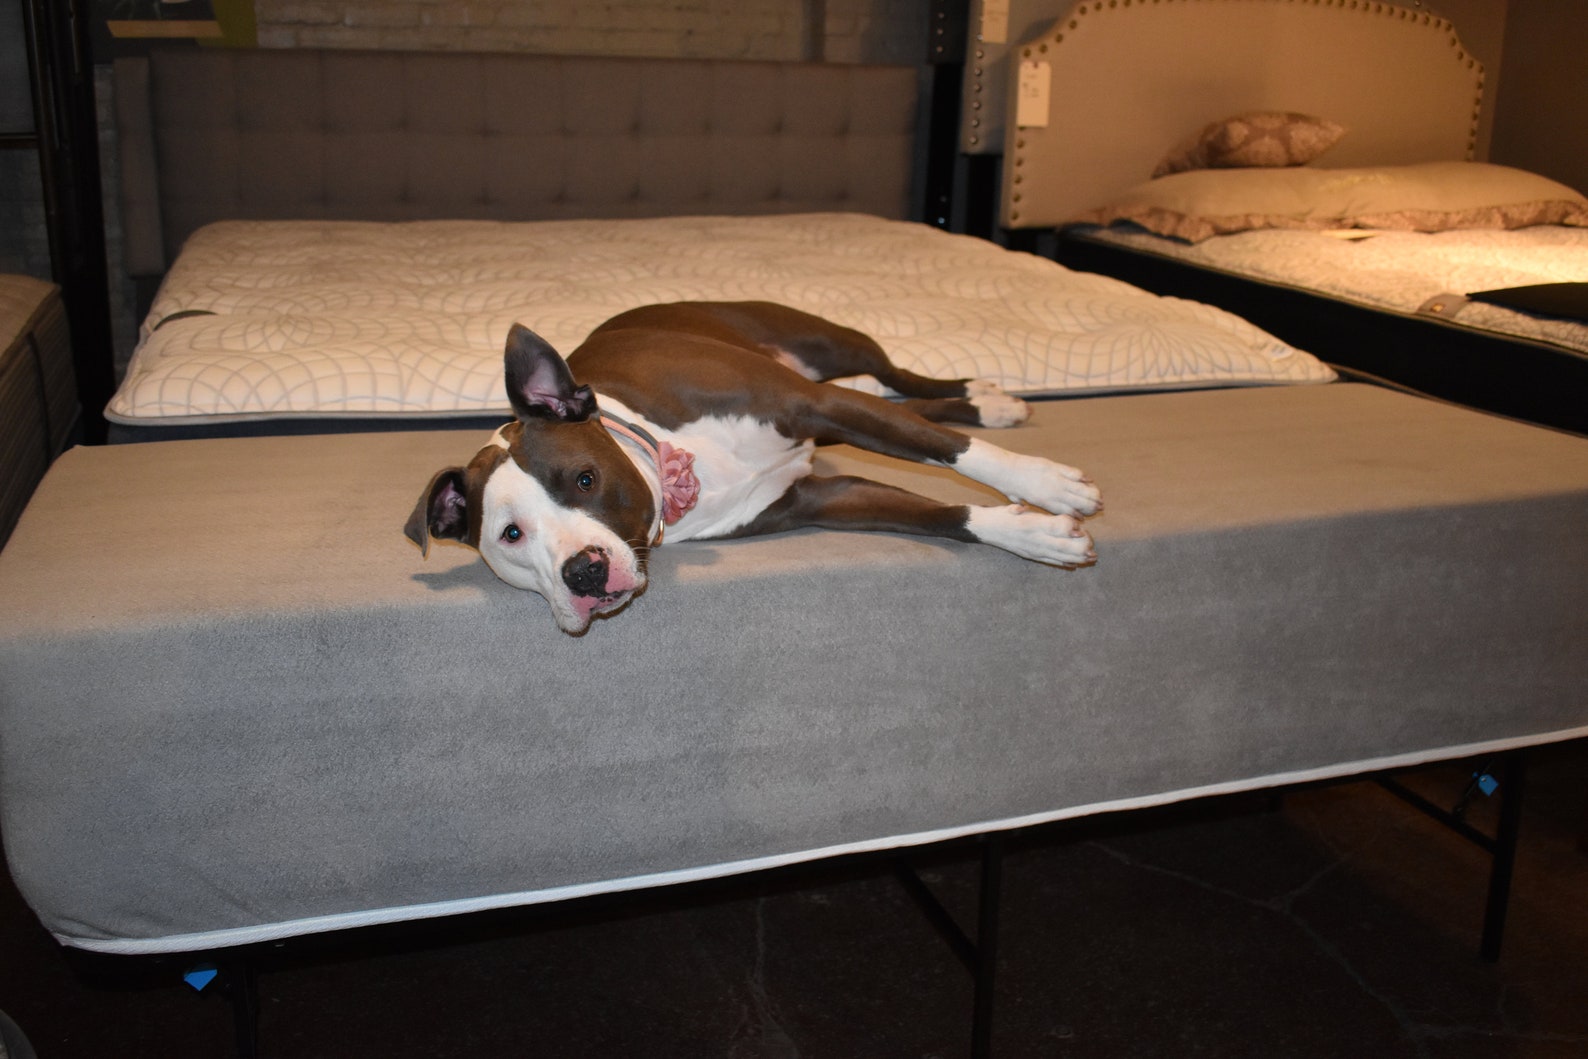 sydney sleep mattress creative pet solutions